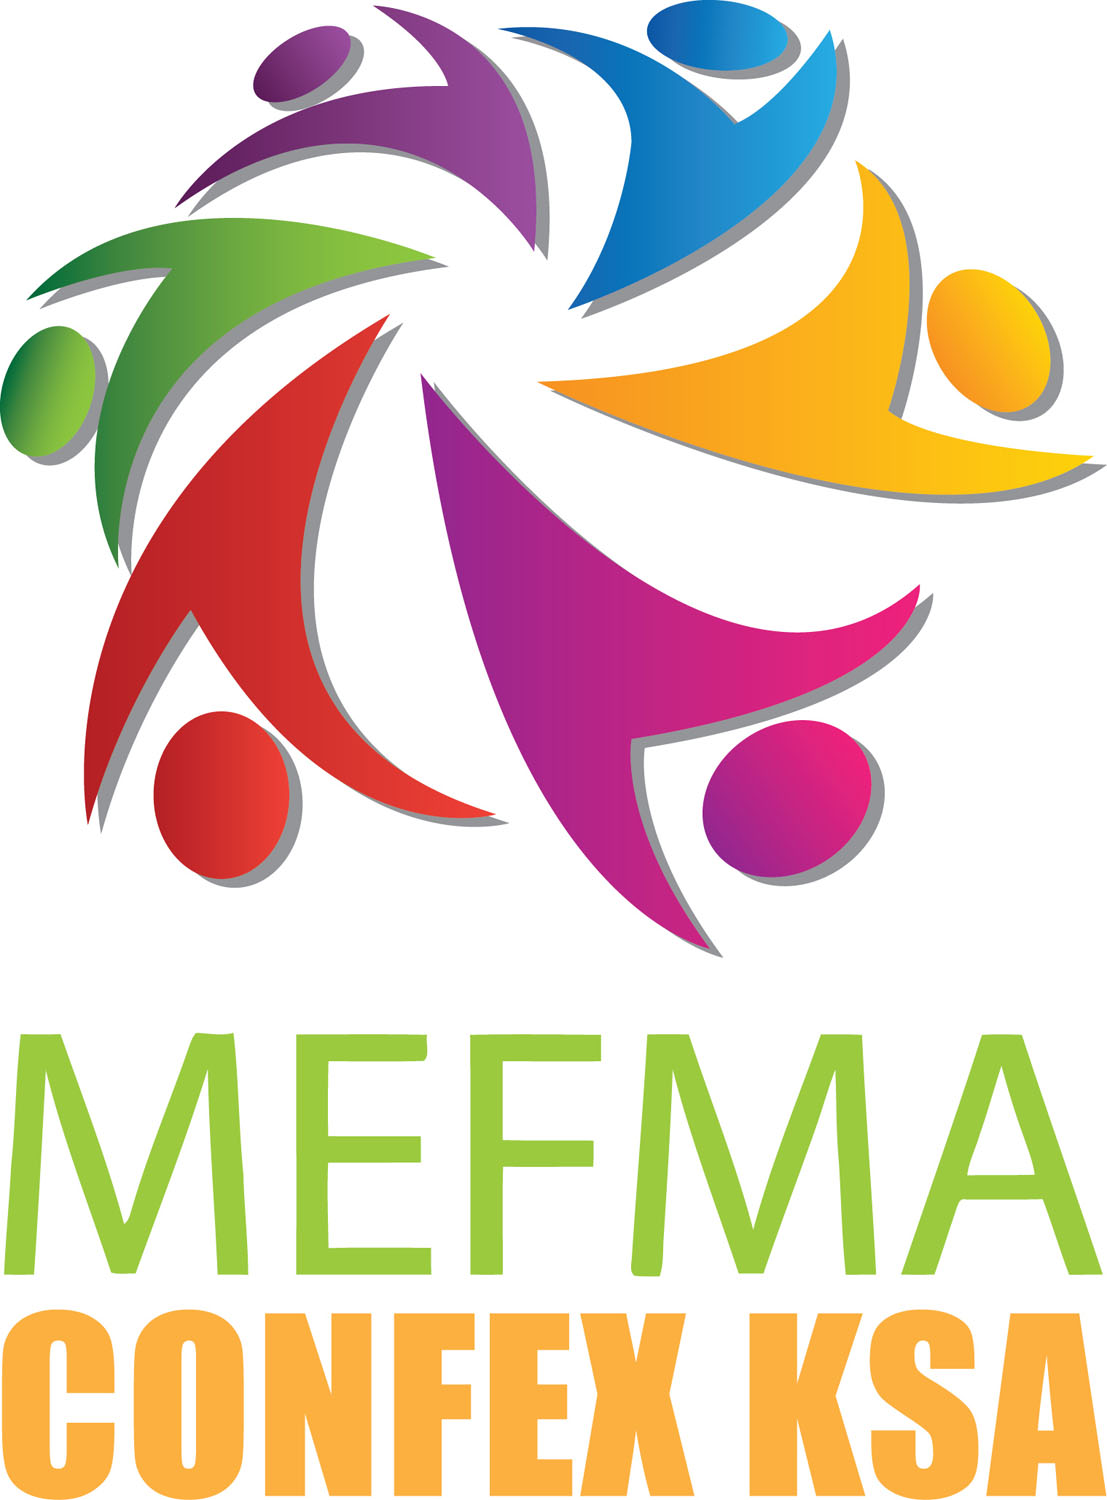 MEFMA-Confex-KSA.jpg